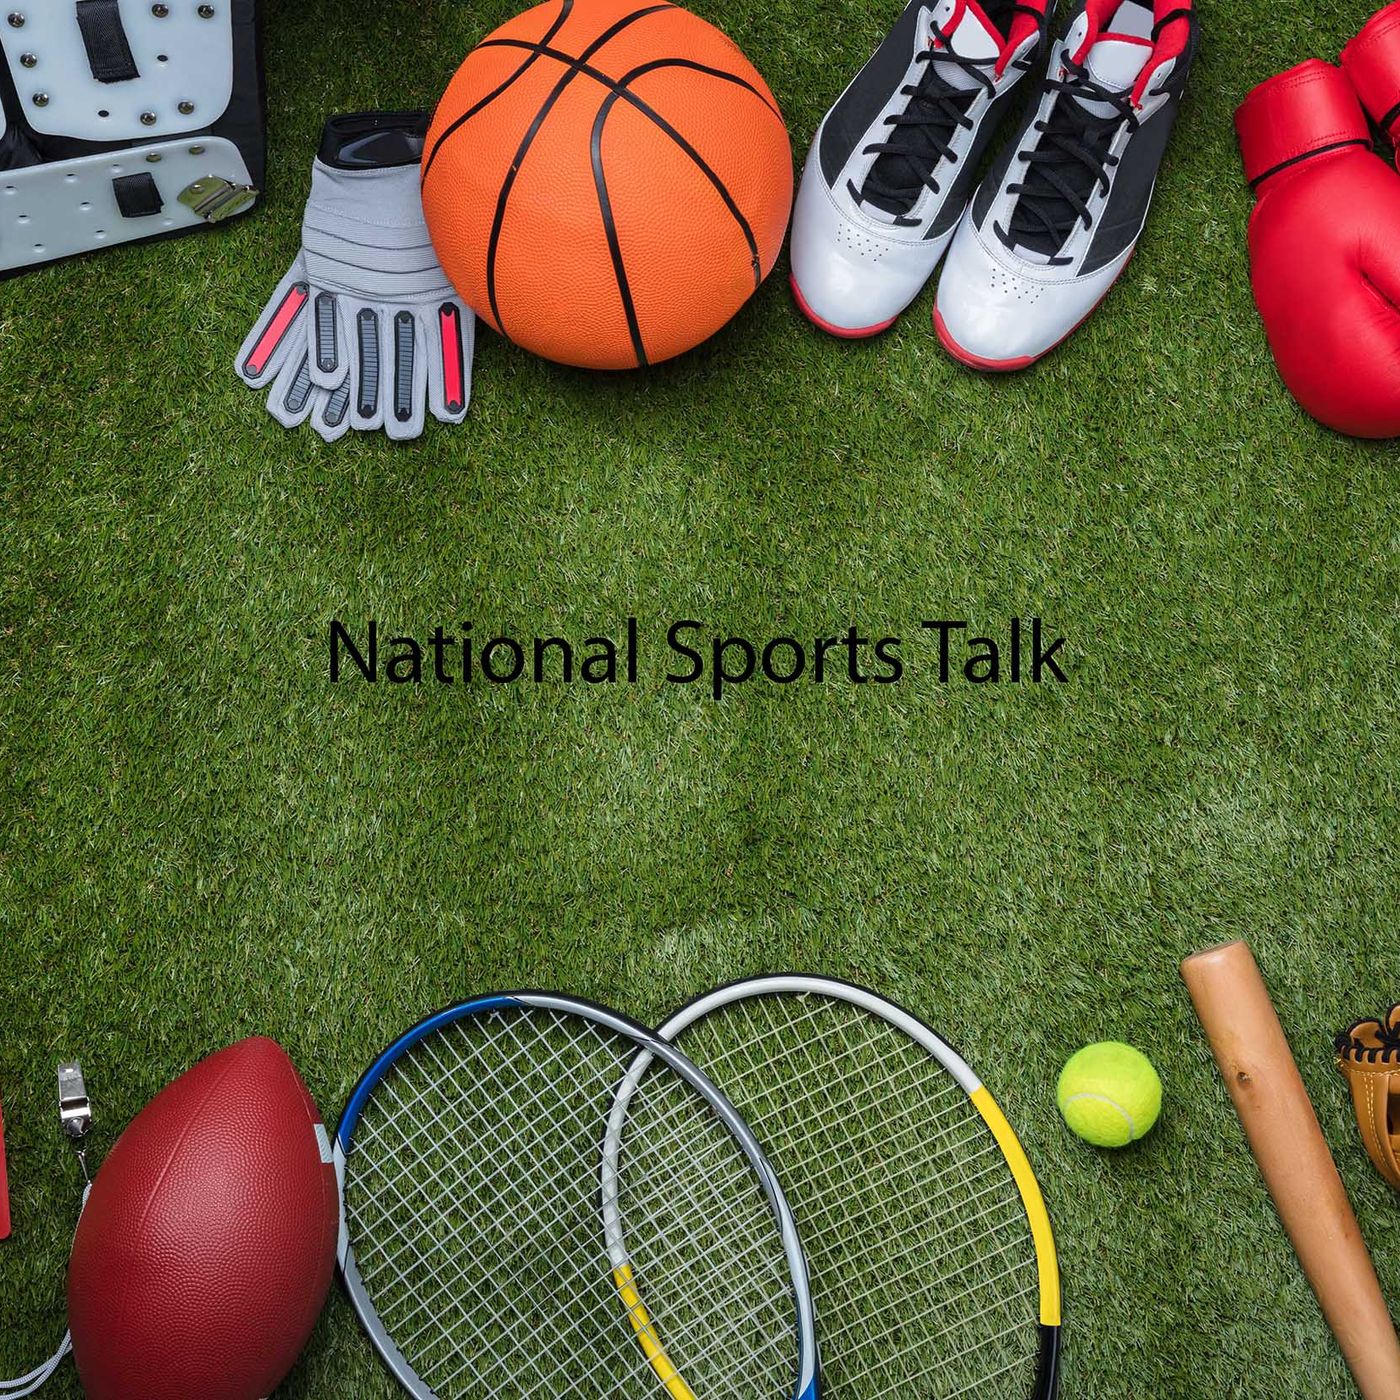 National Sports Talk March 5th, 2020